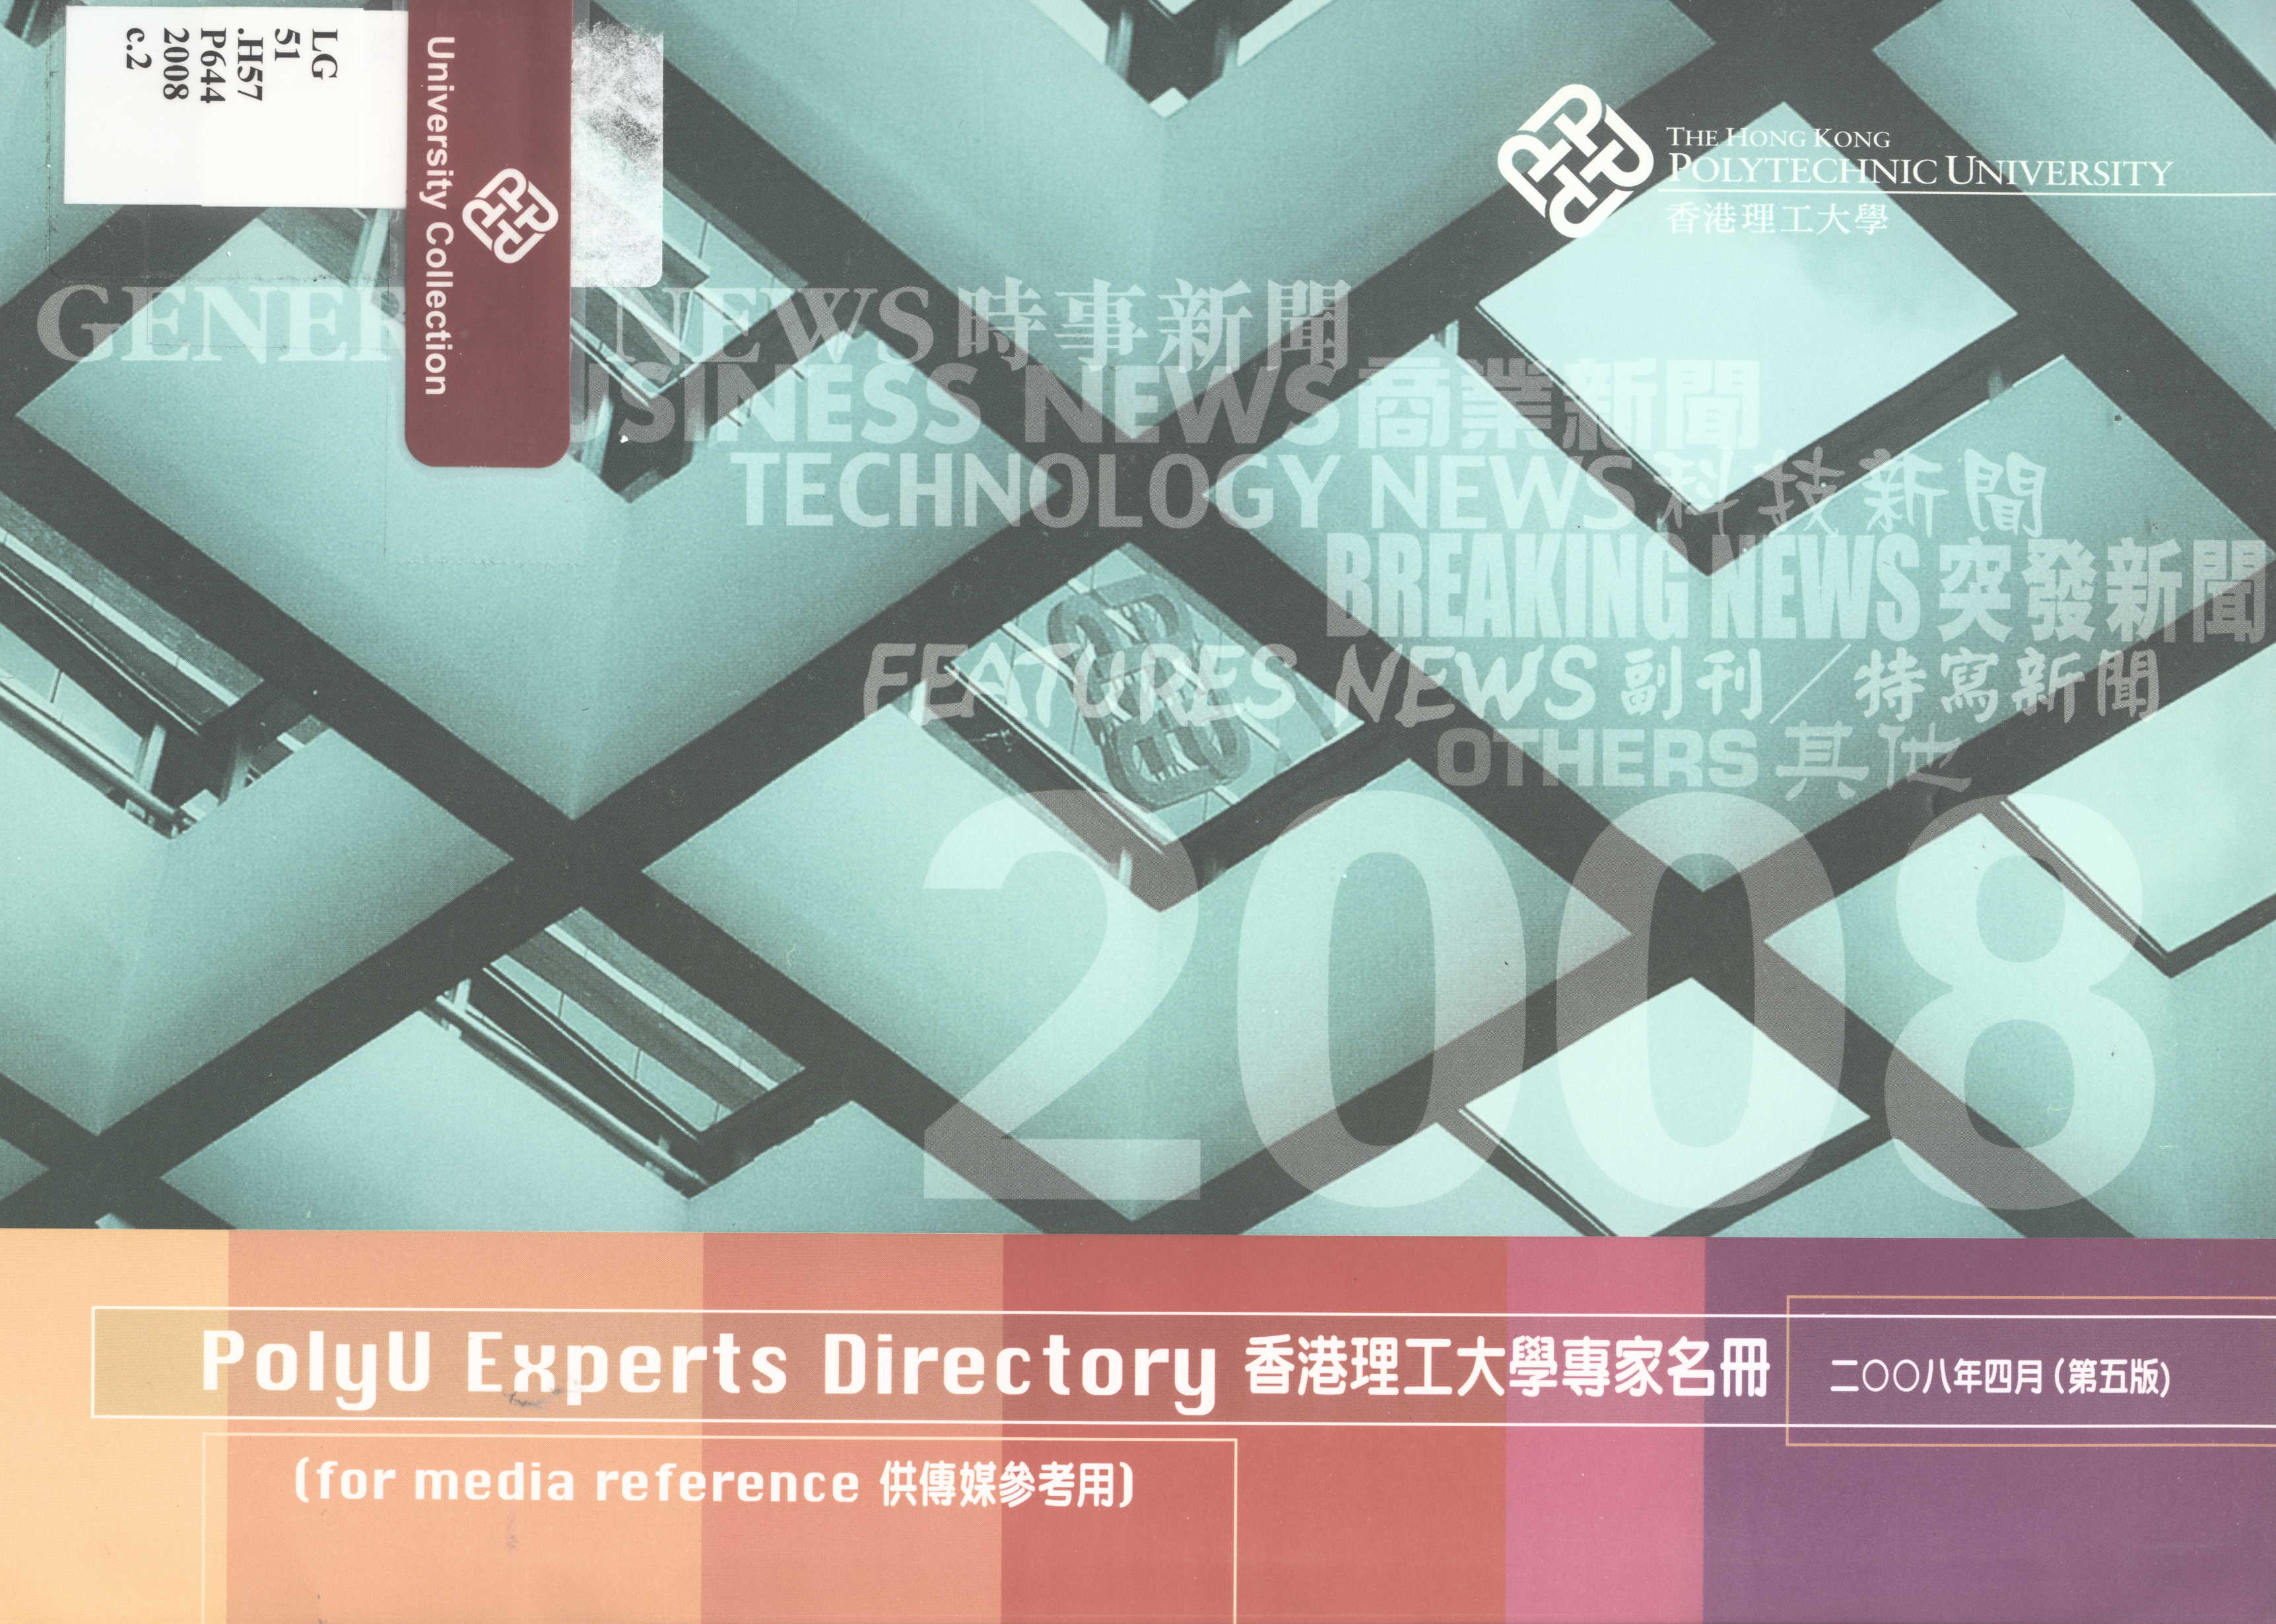 PolyU experts directory [2008]  